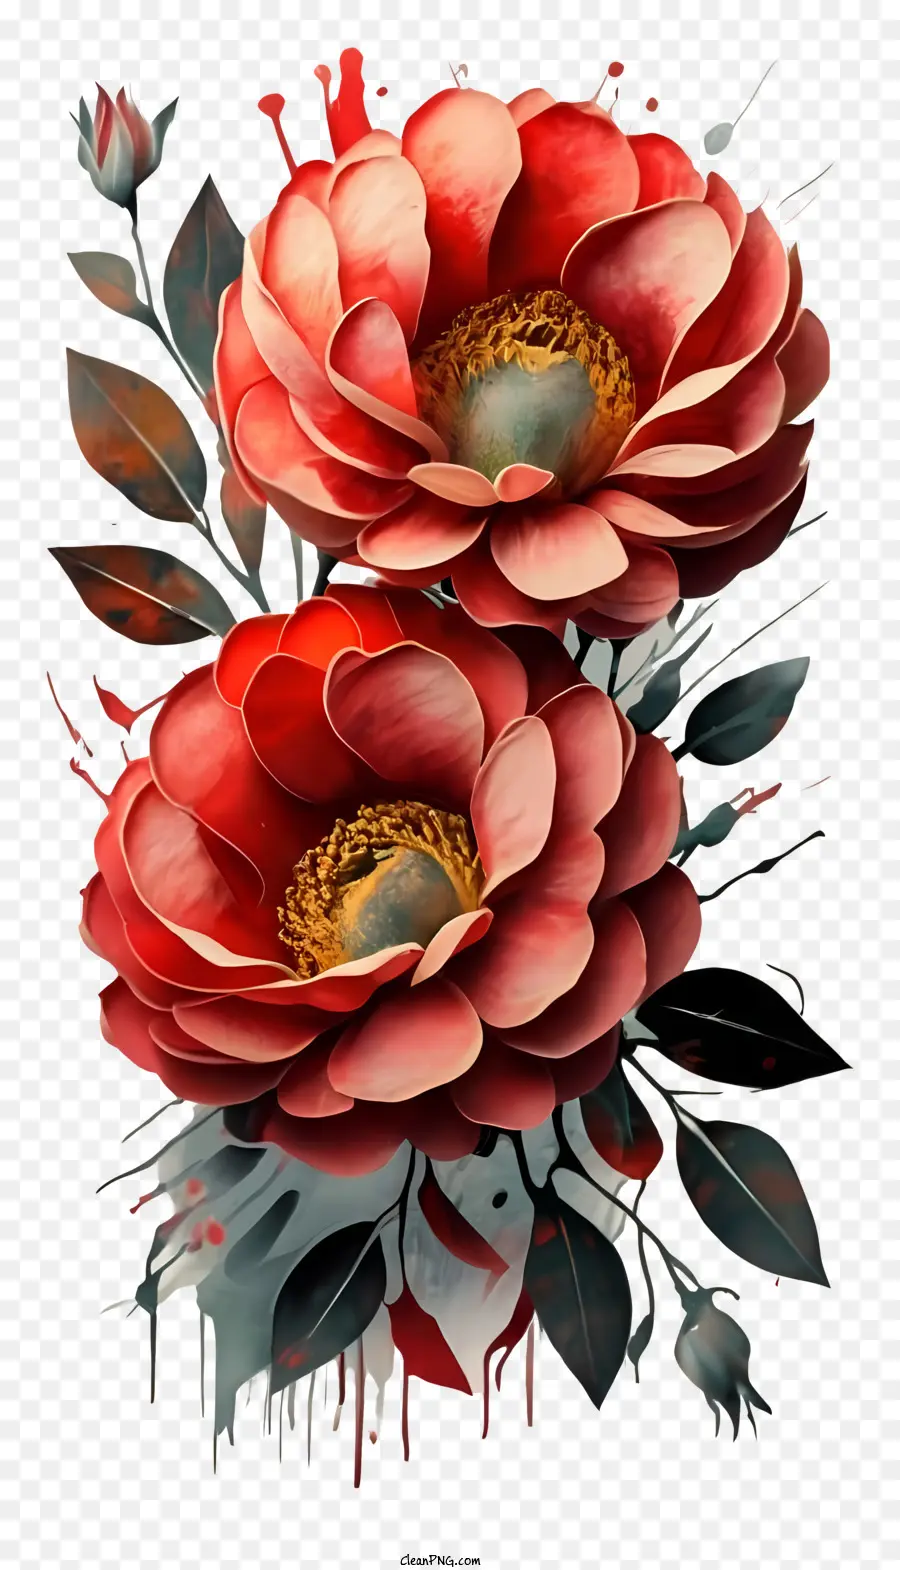 digital painting red flowers drops of black paint black background vase or pot